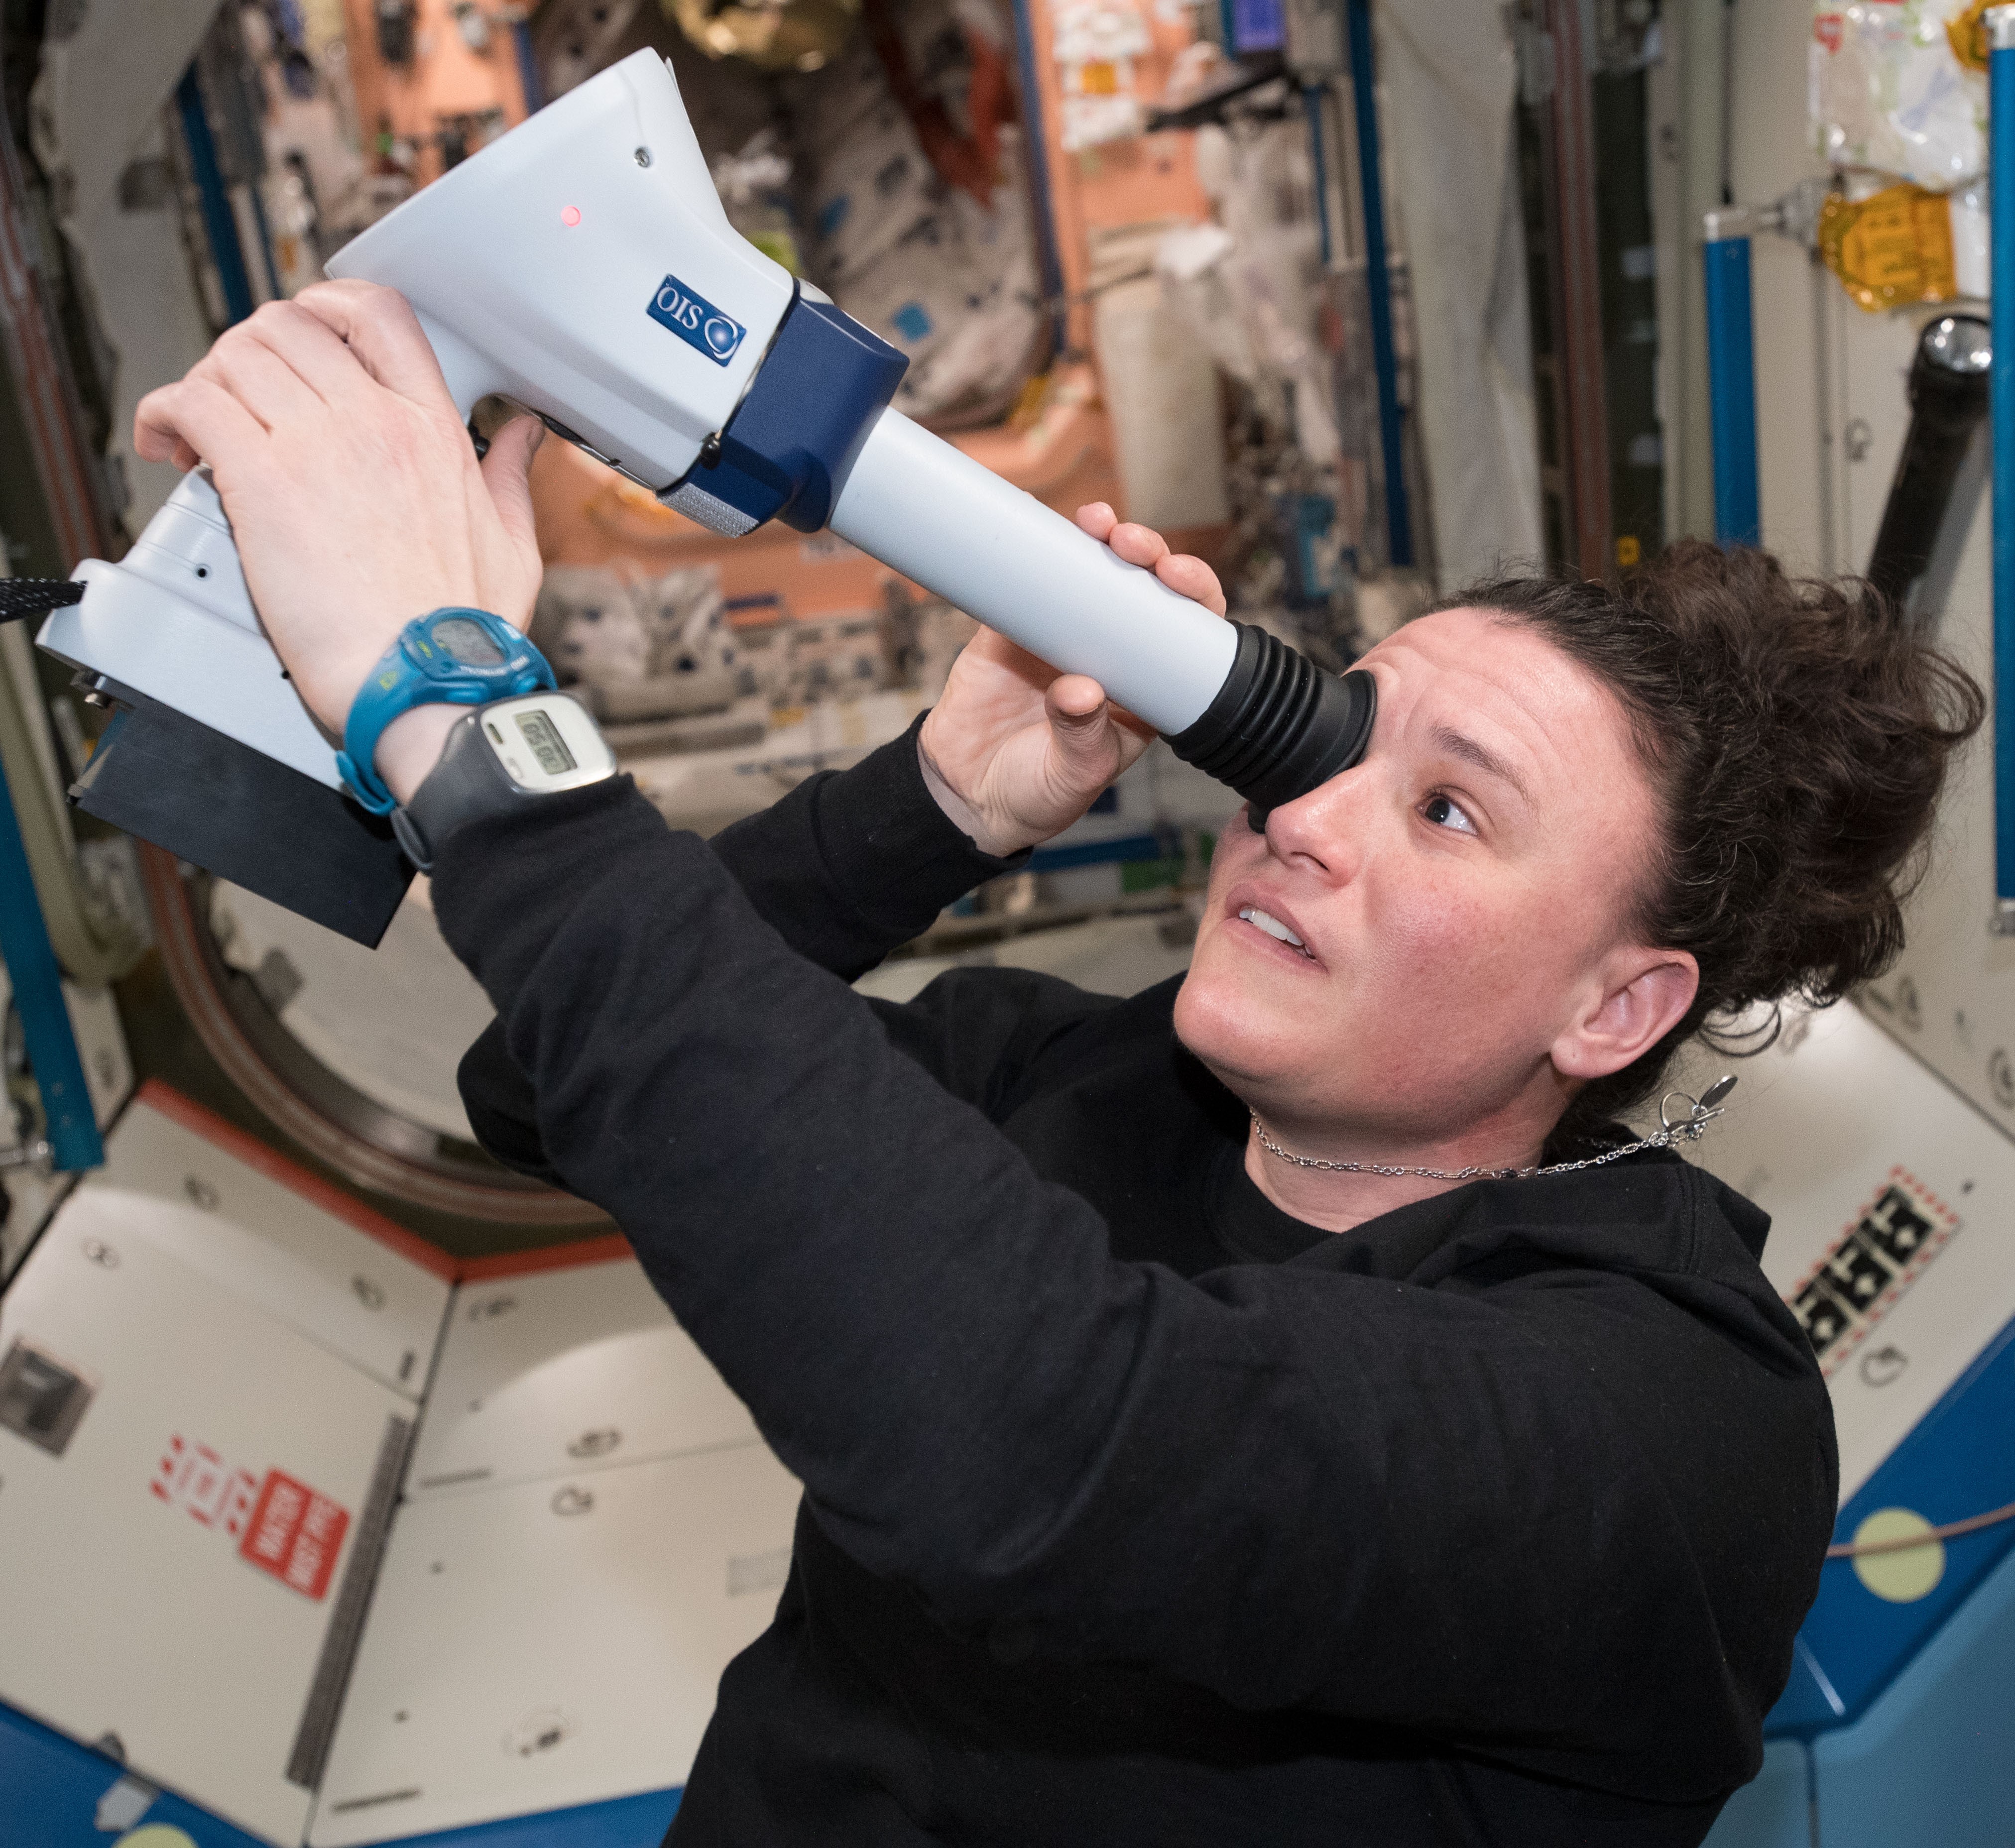 NASA astronaut Serena M. Auñón-Chancellor completing a session of the Eye Exam